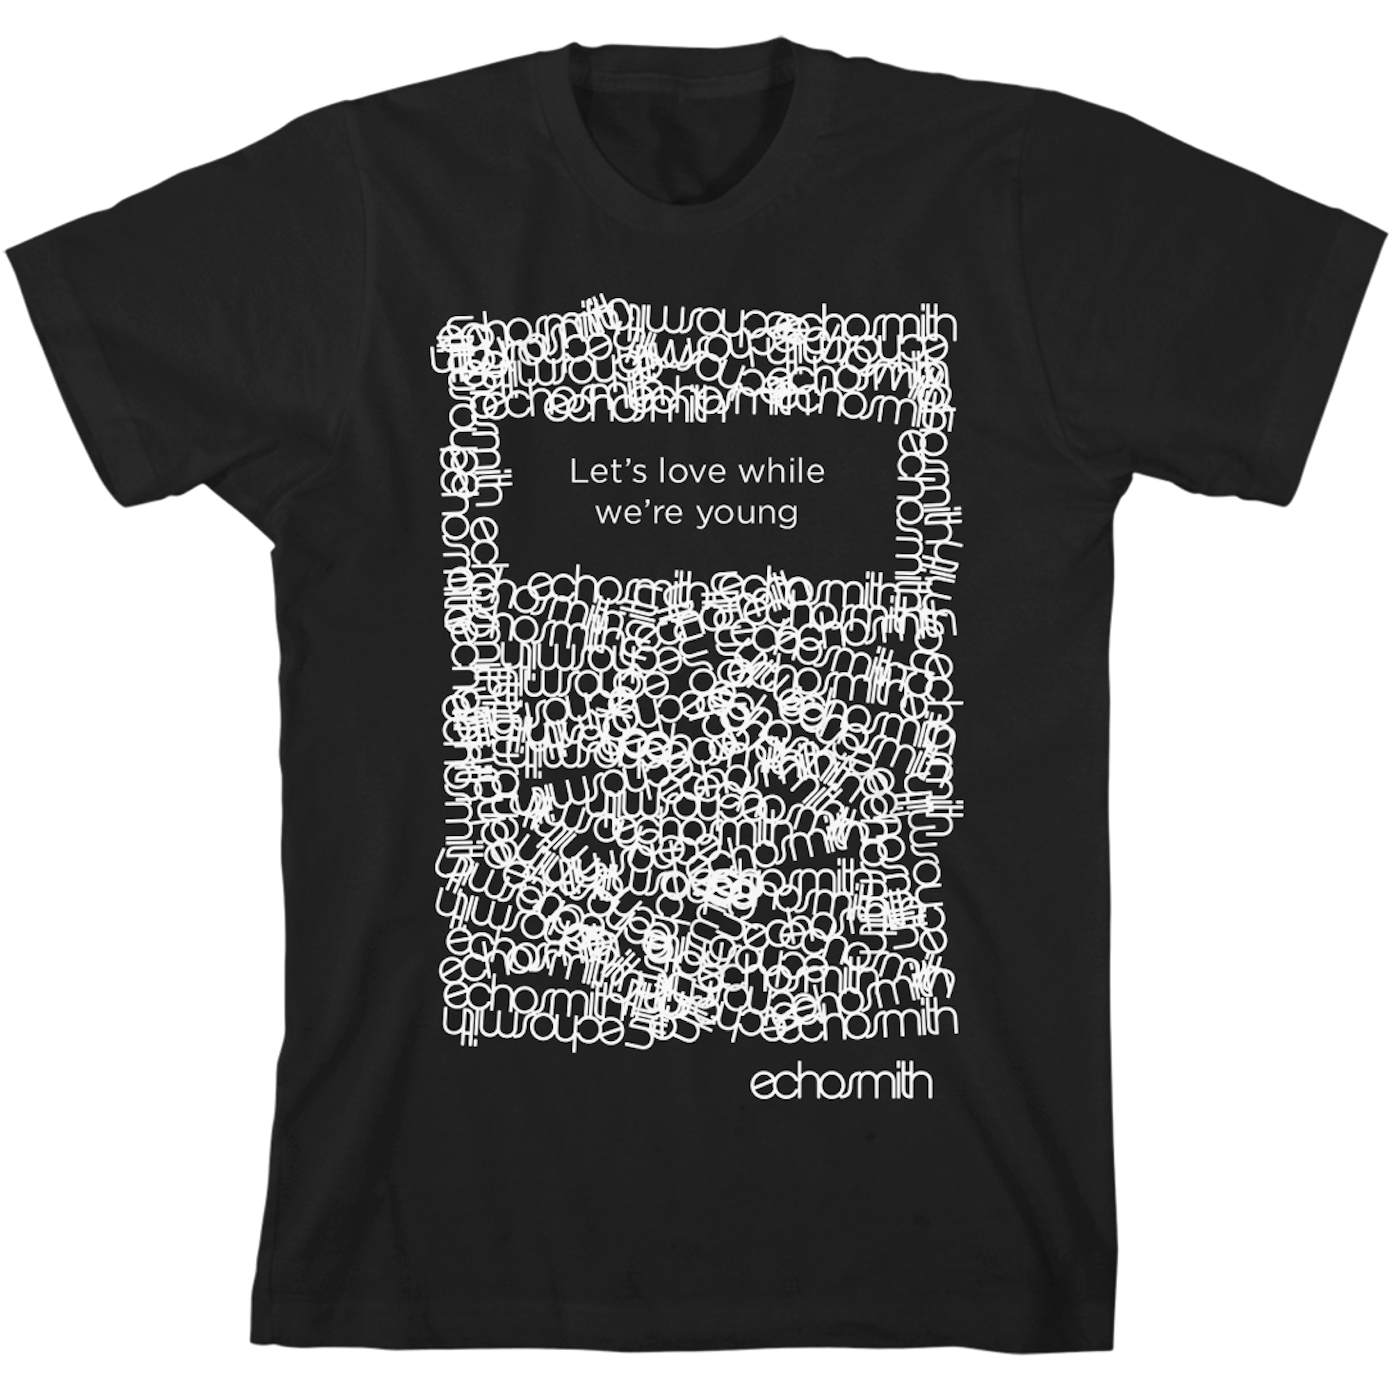 Echosmith Scribble T-Shirt